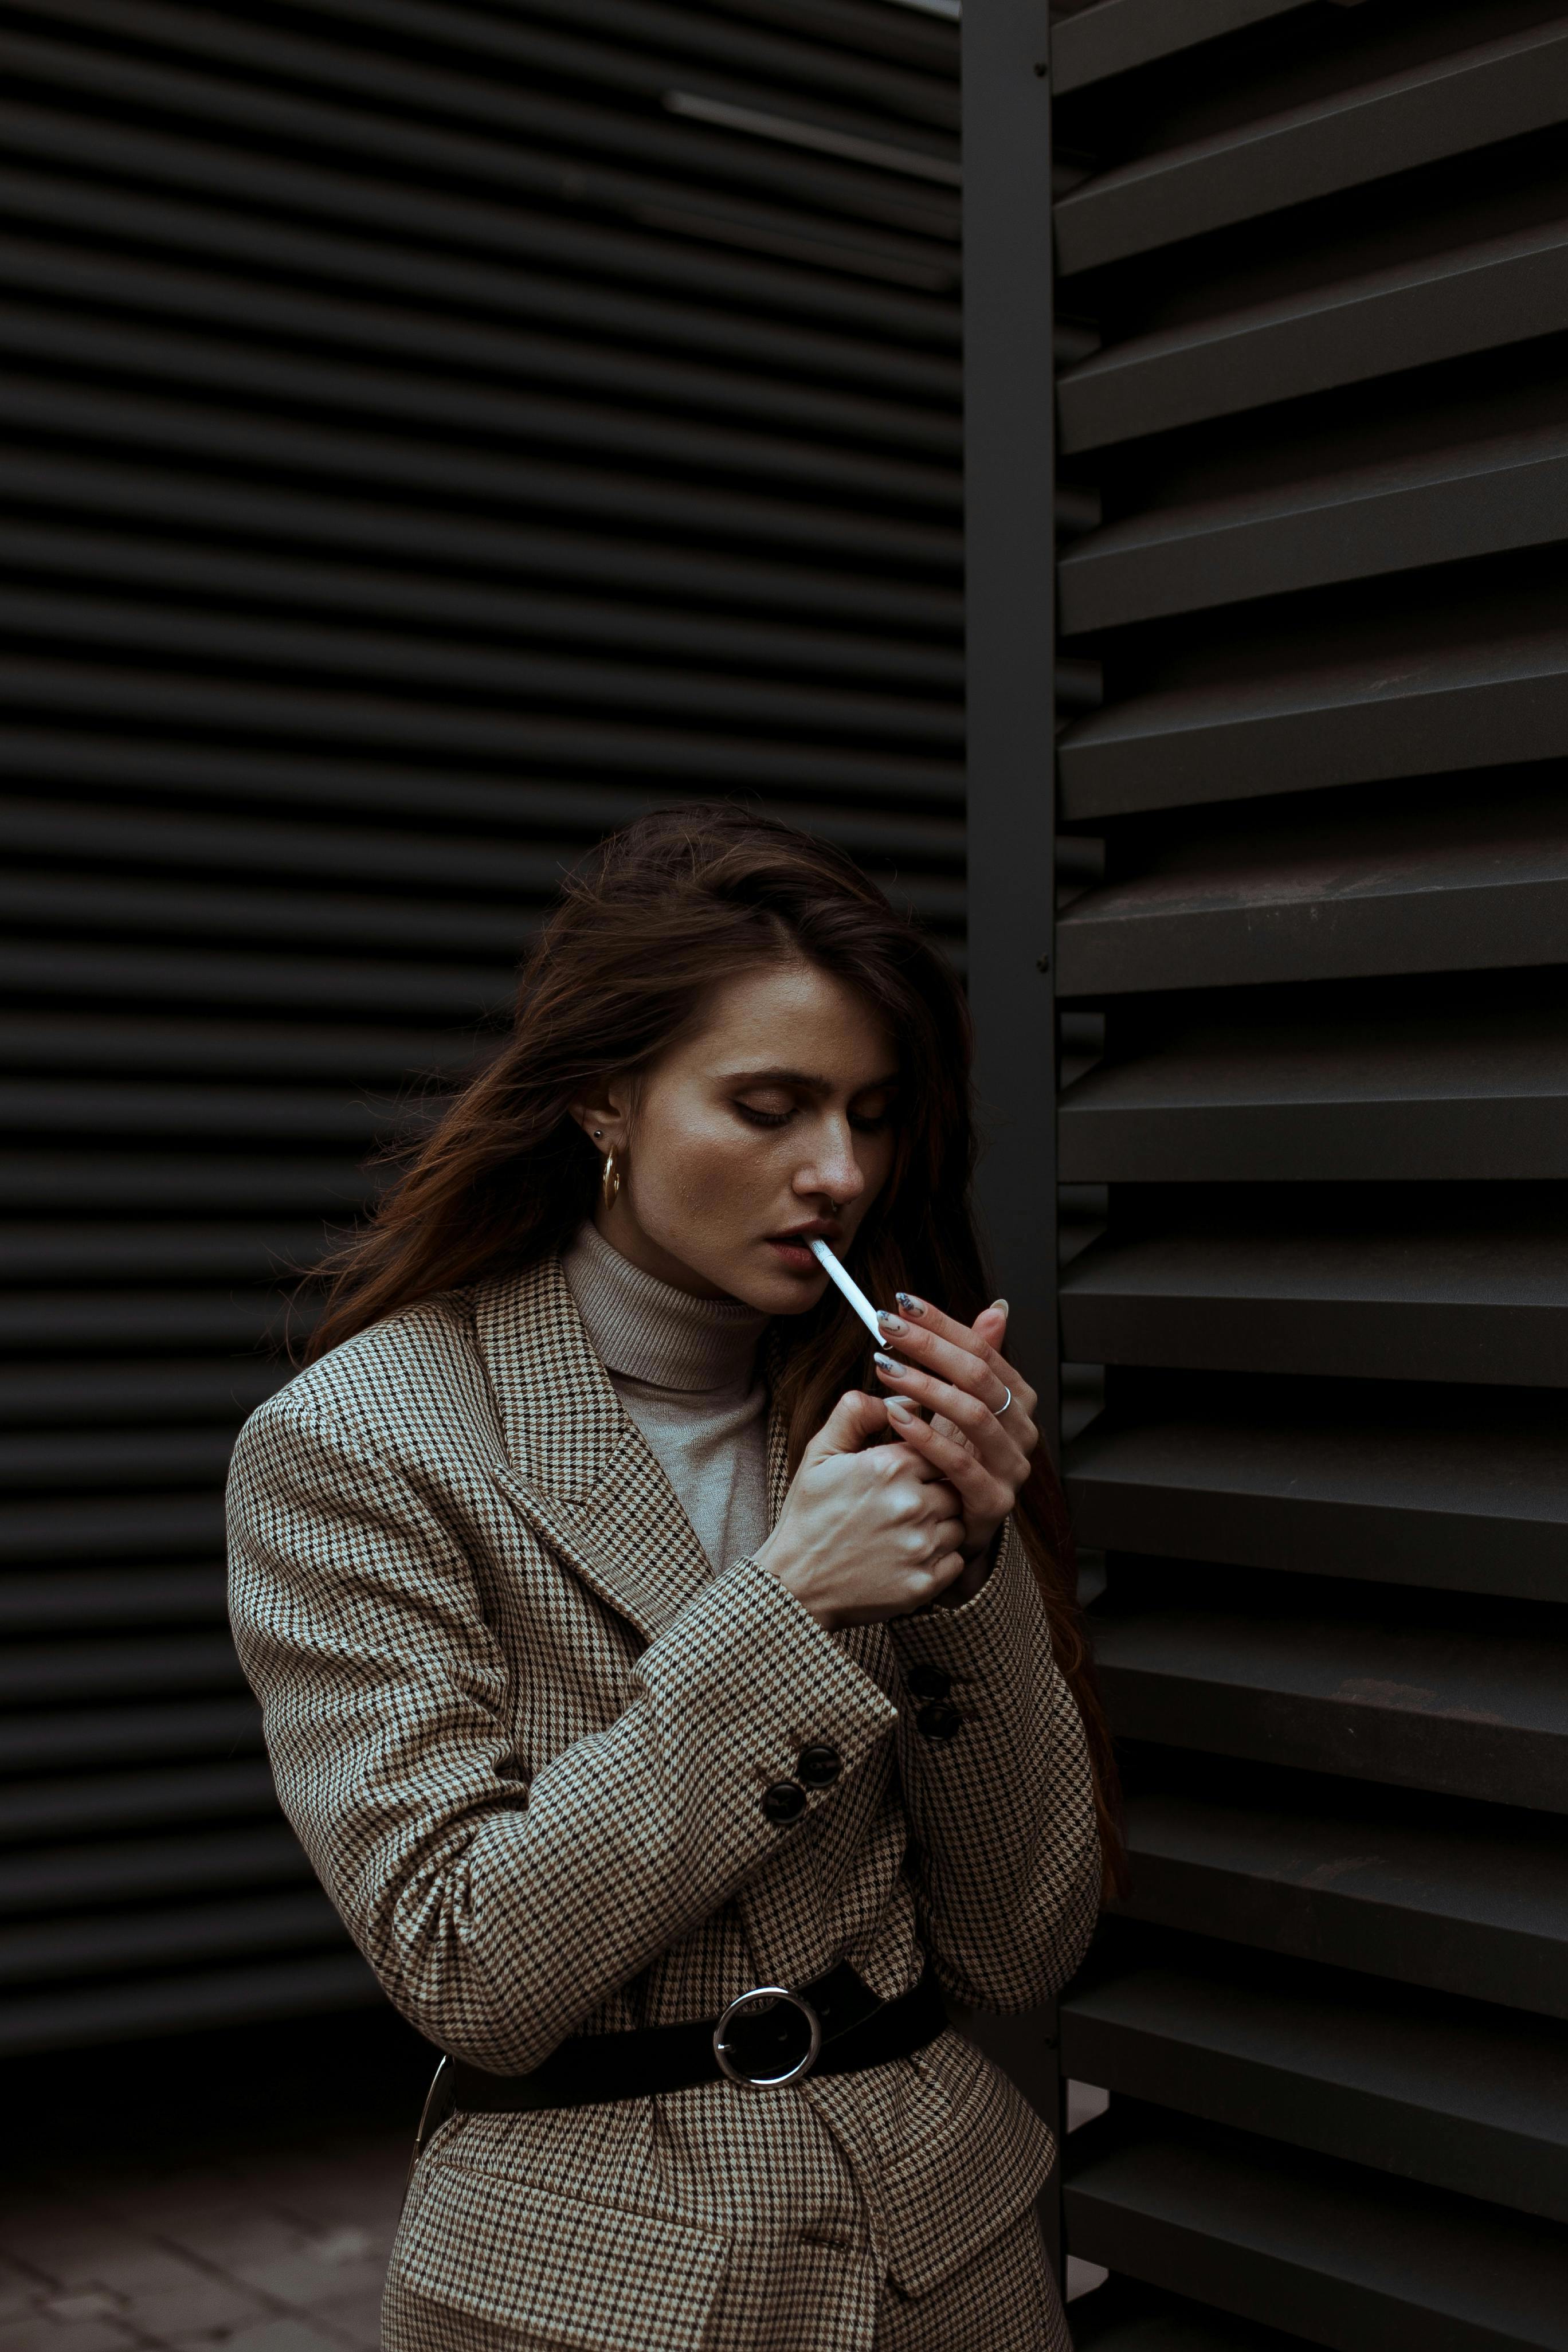 Stock photo of a woman smoking a cigarette.